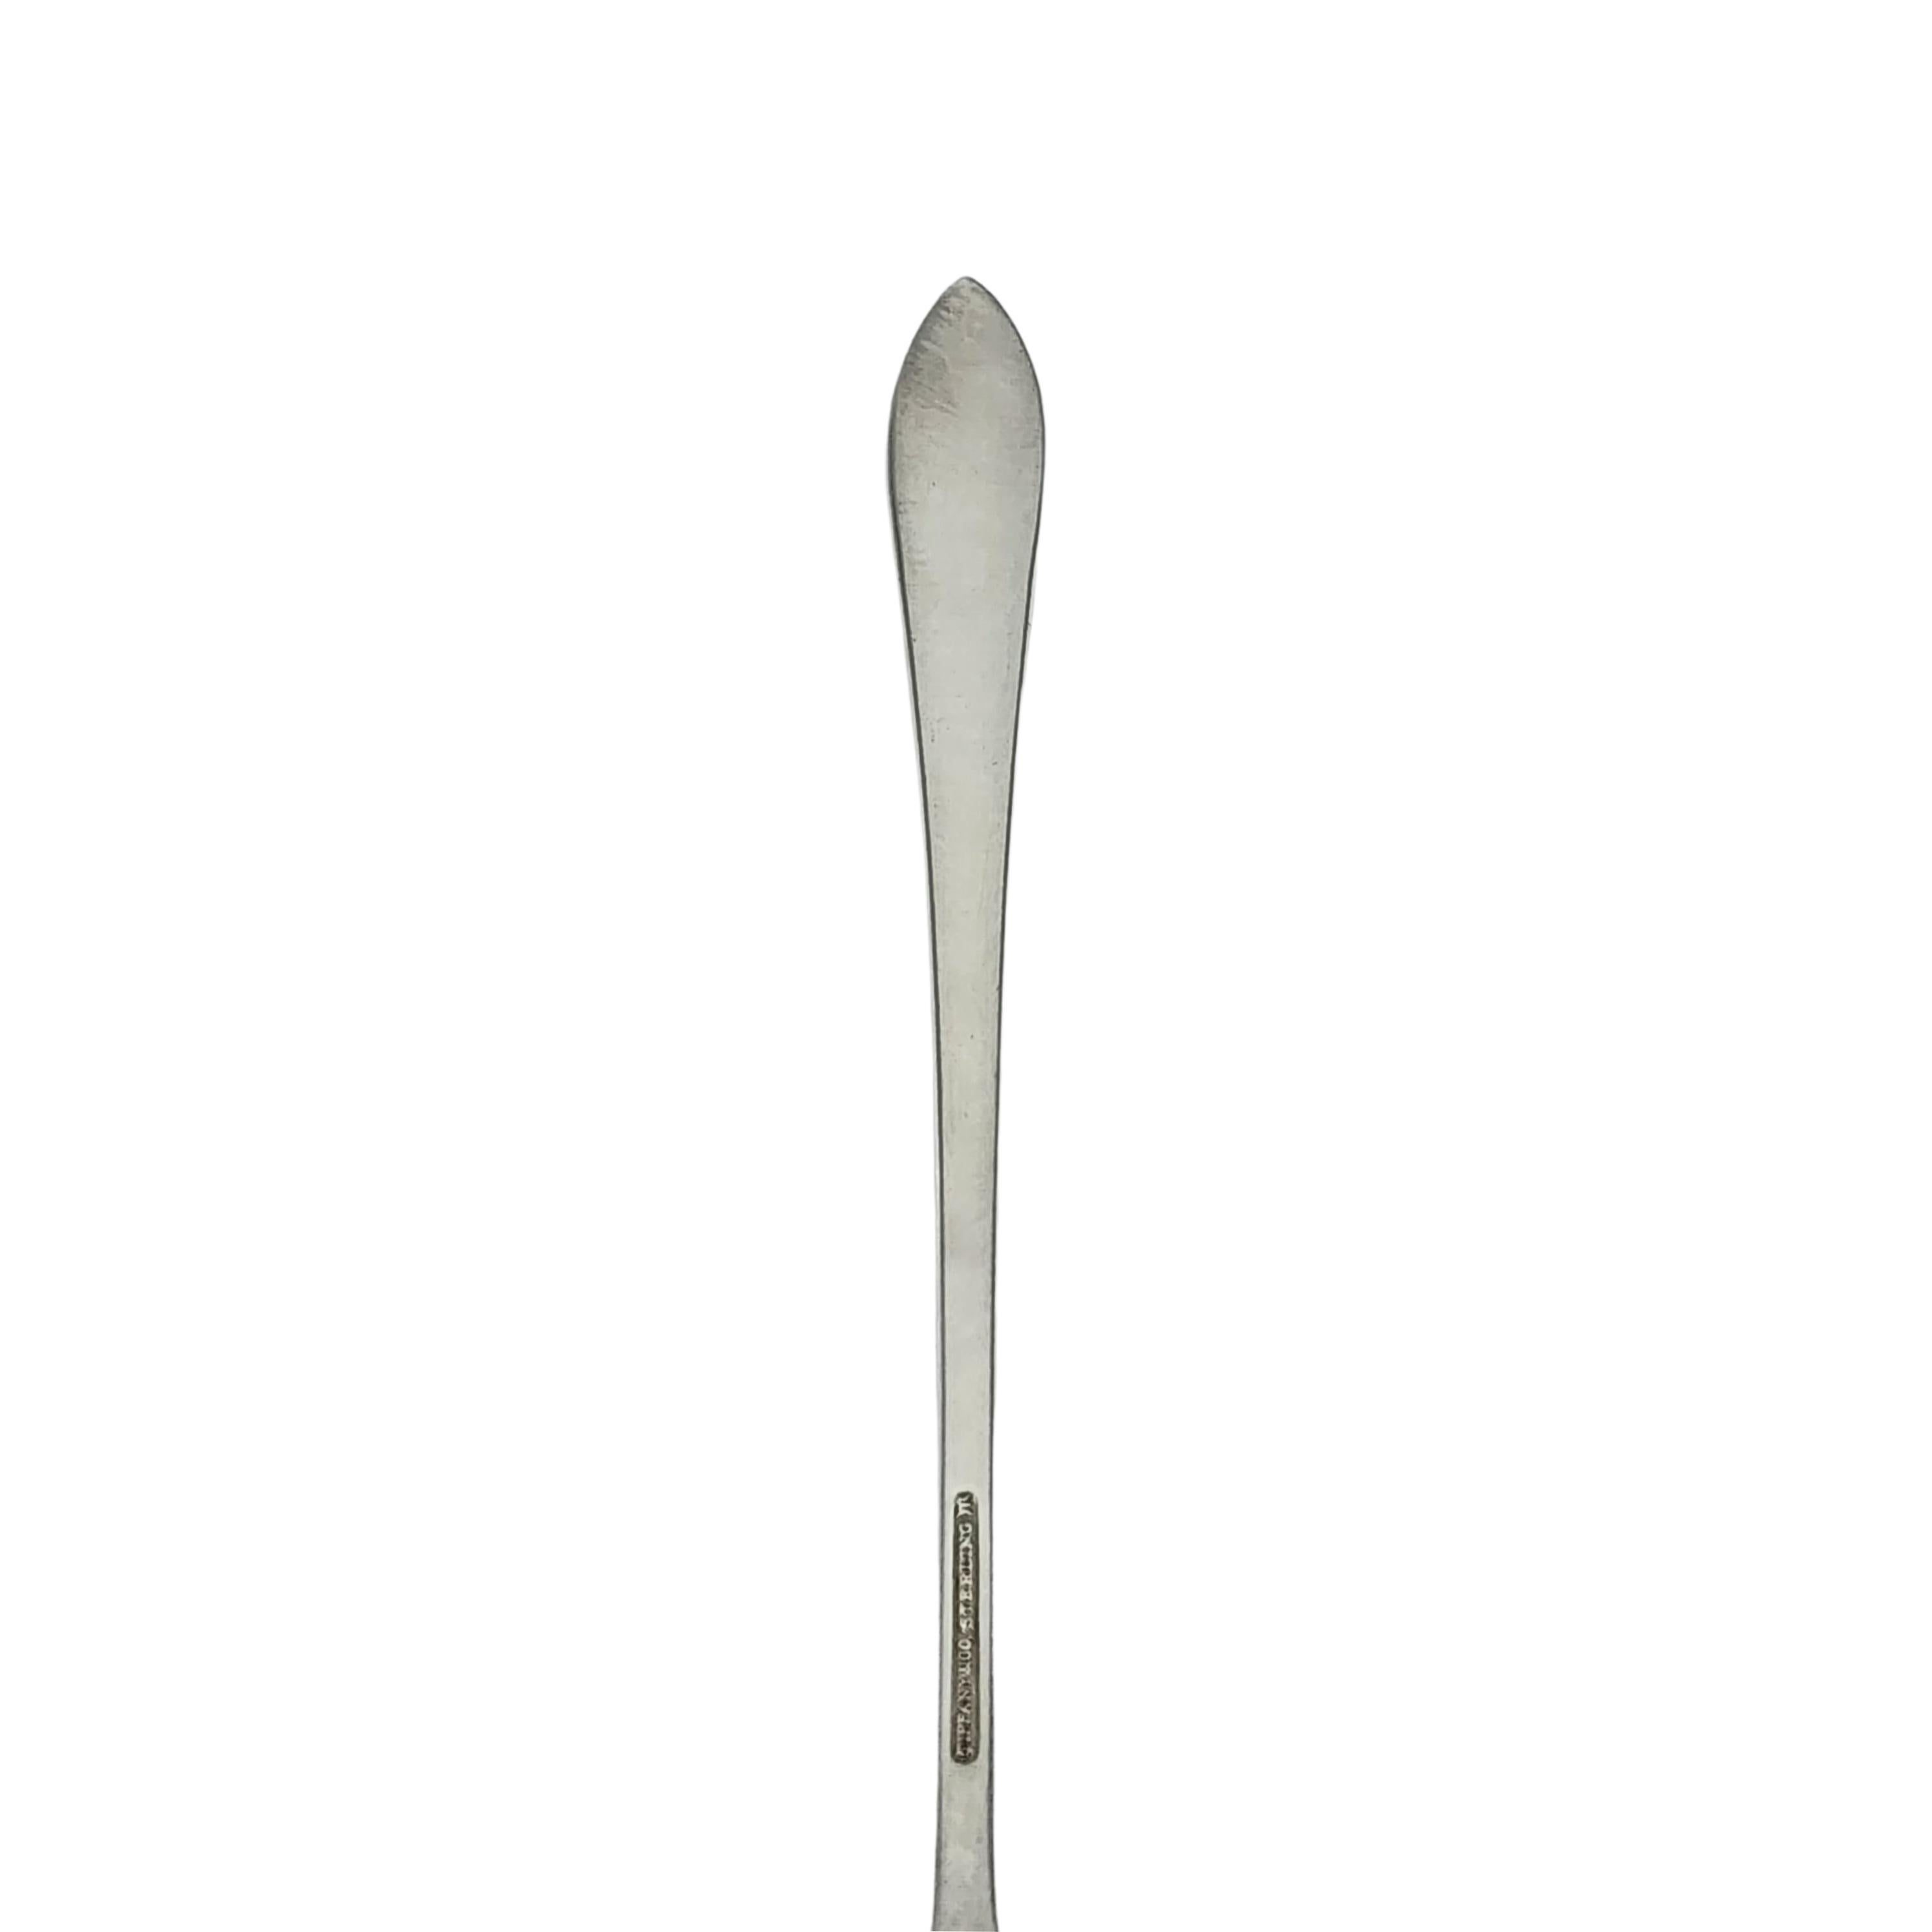 Tiffany & Co Faneuil Sterling Silver Baby Feeding Spoon #15490 2